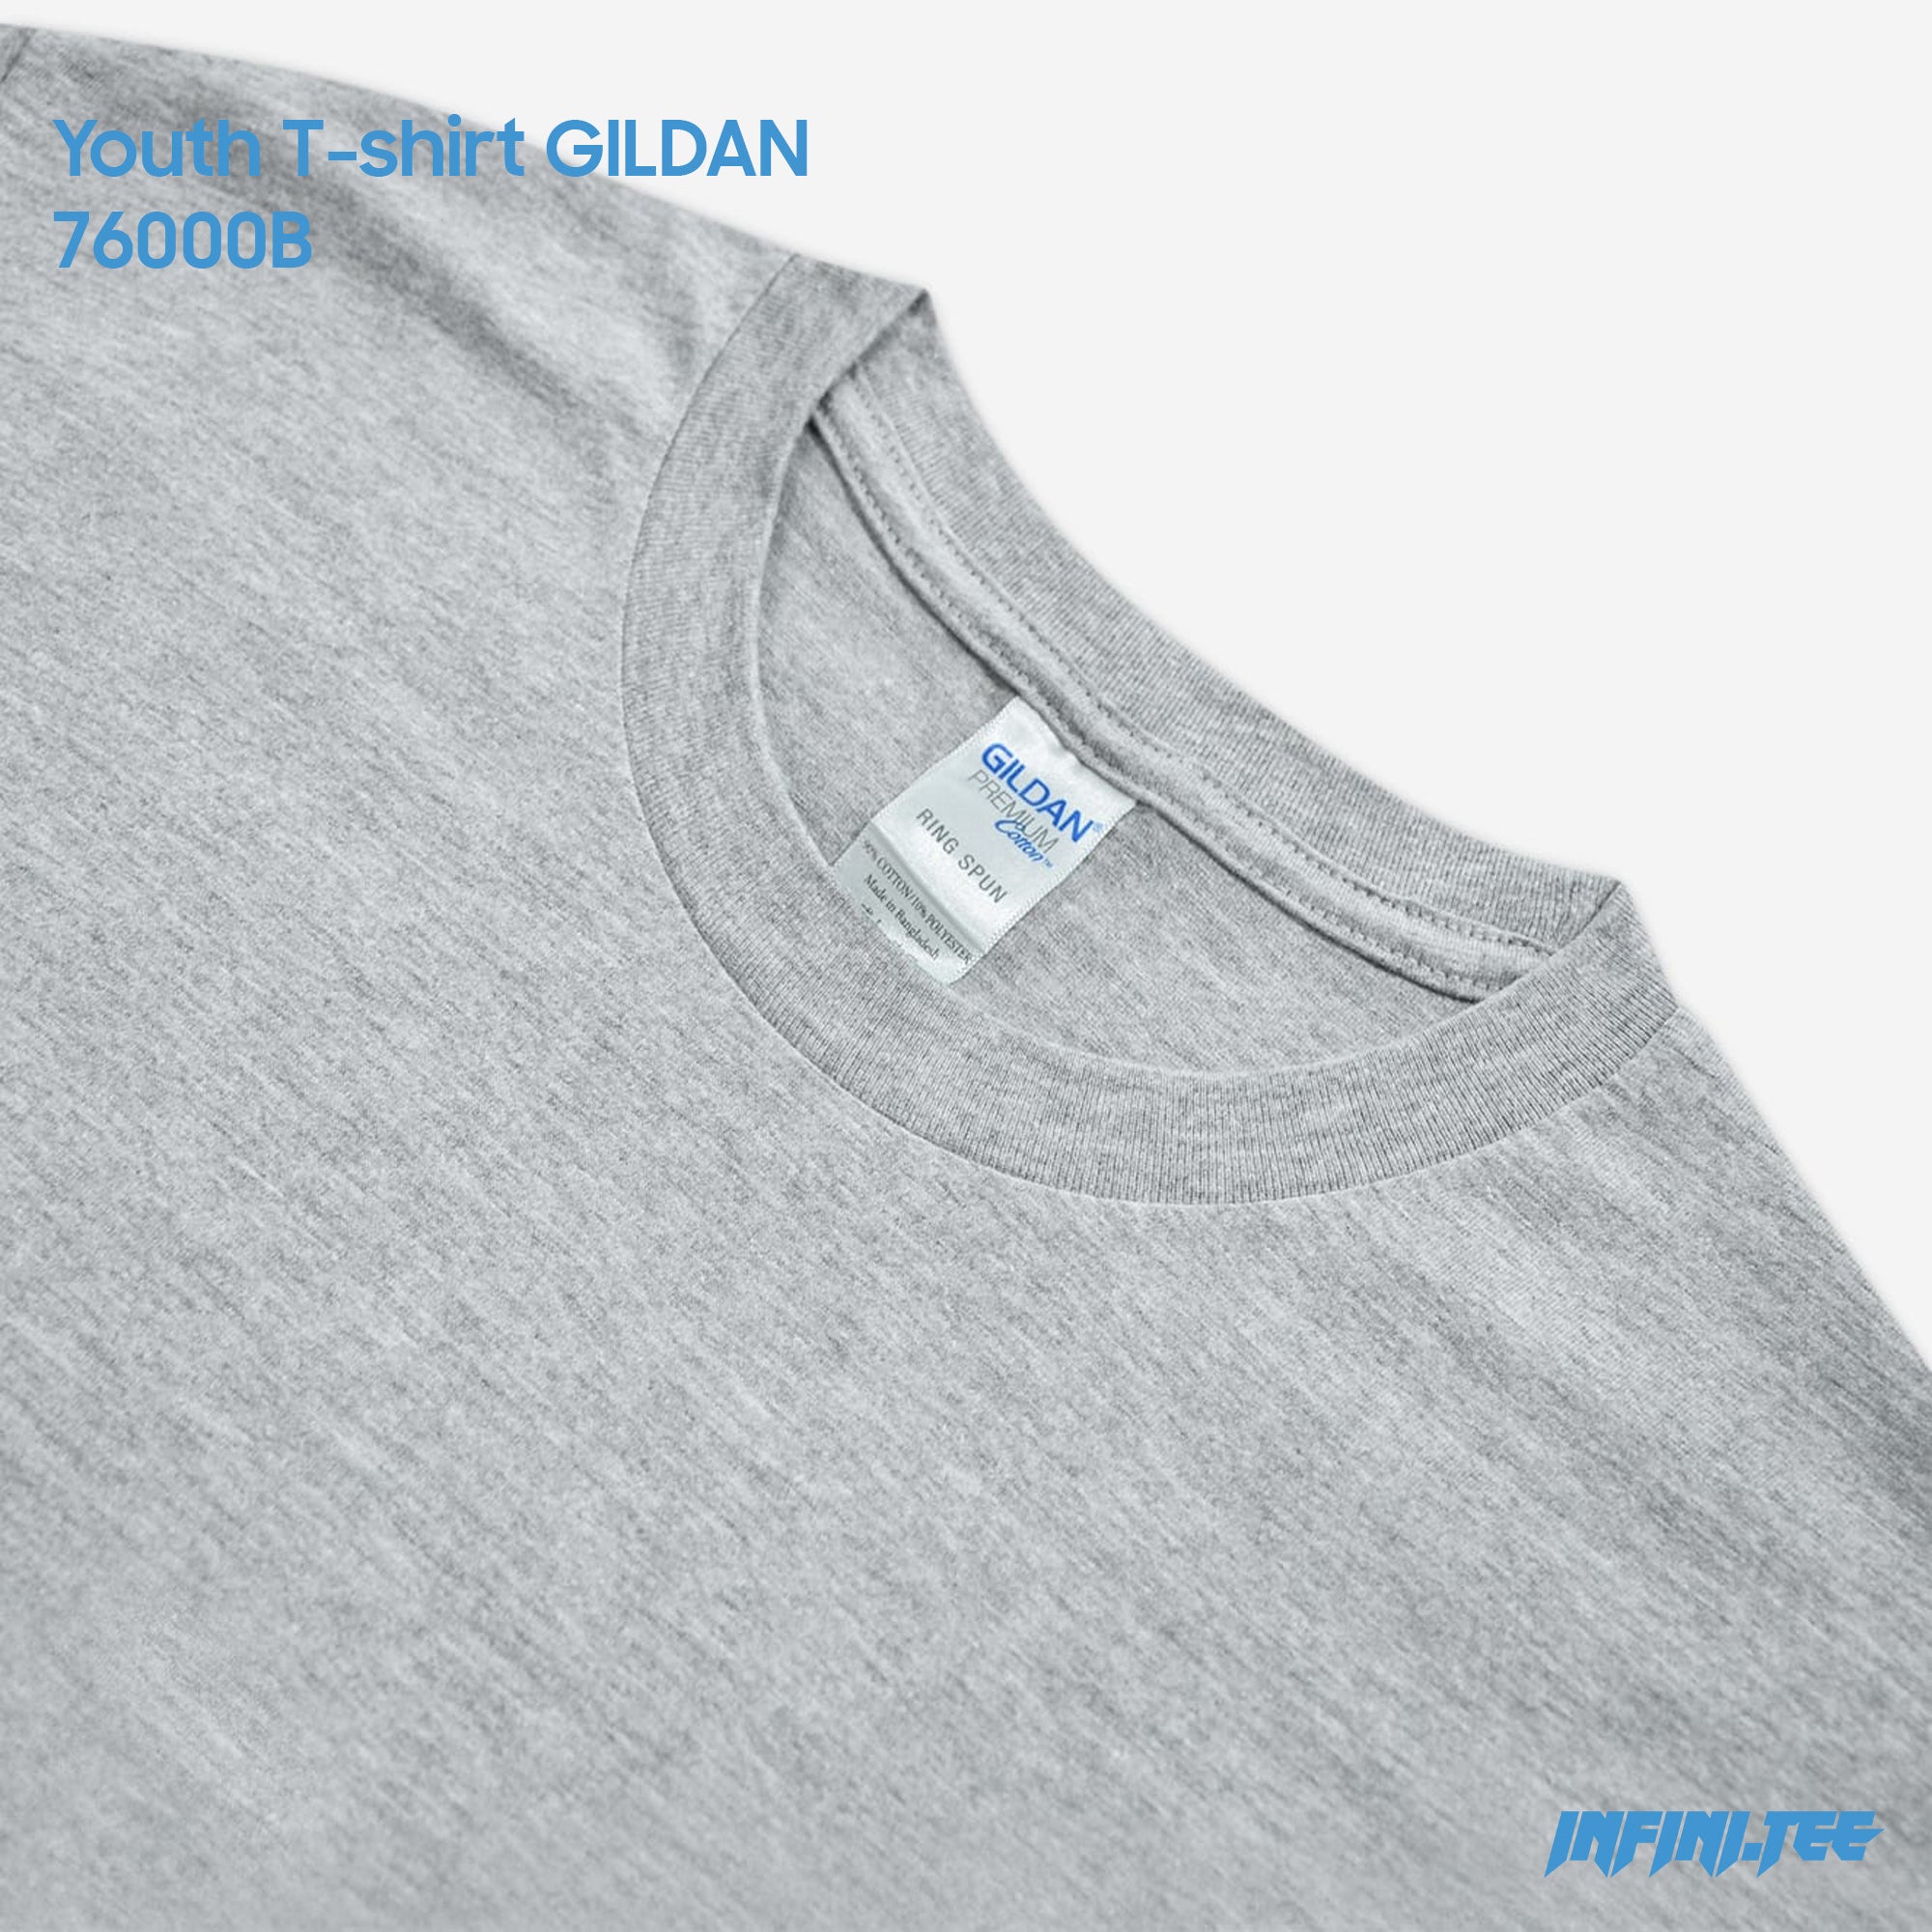 Youth T-shirt 76000B GILDAN - SP GREY